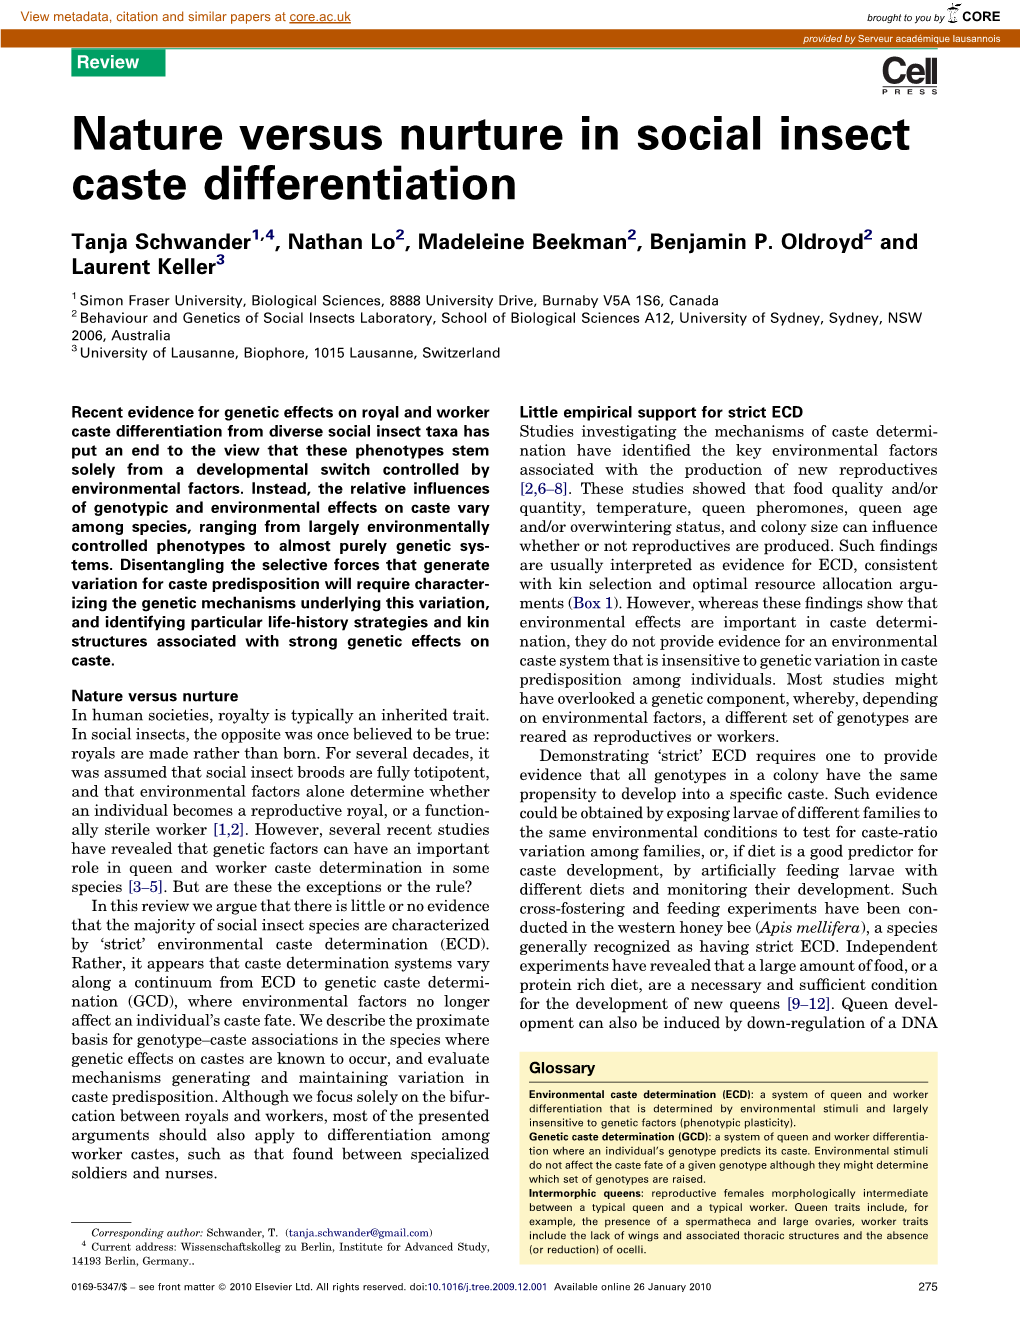 Nature Versus Nurture in Social Insect Caste Differentiation